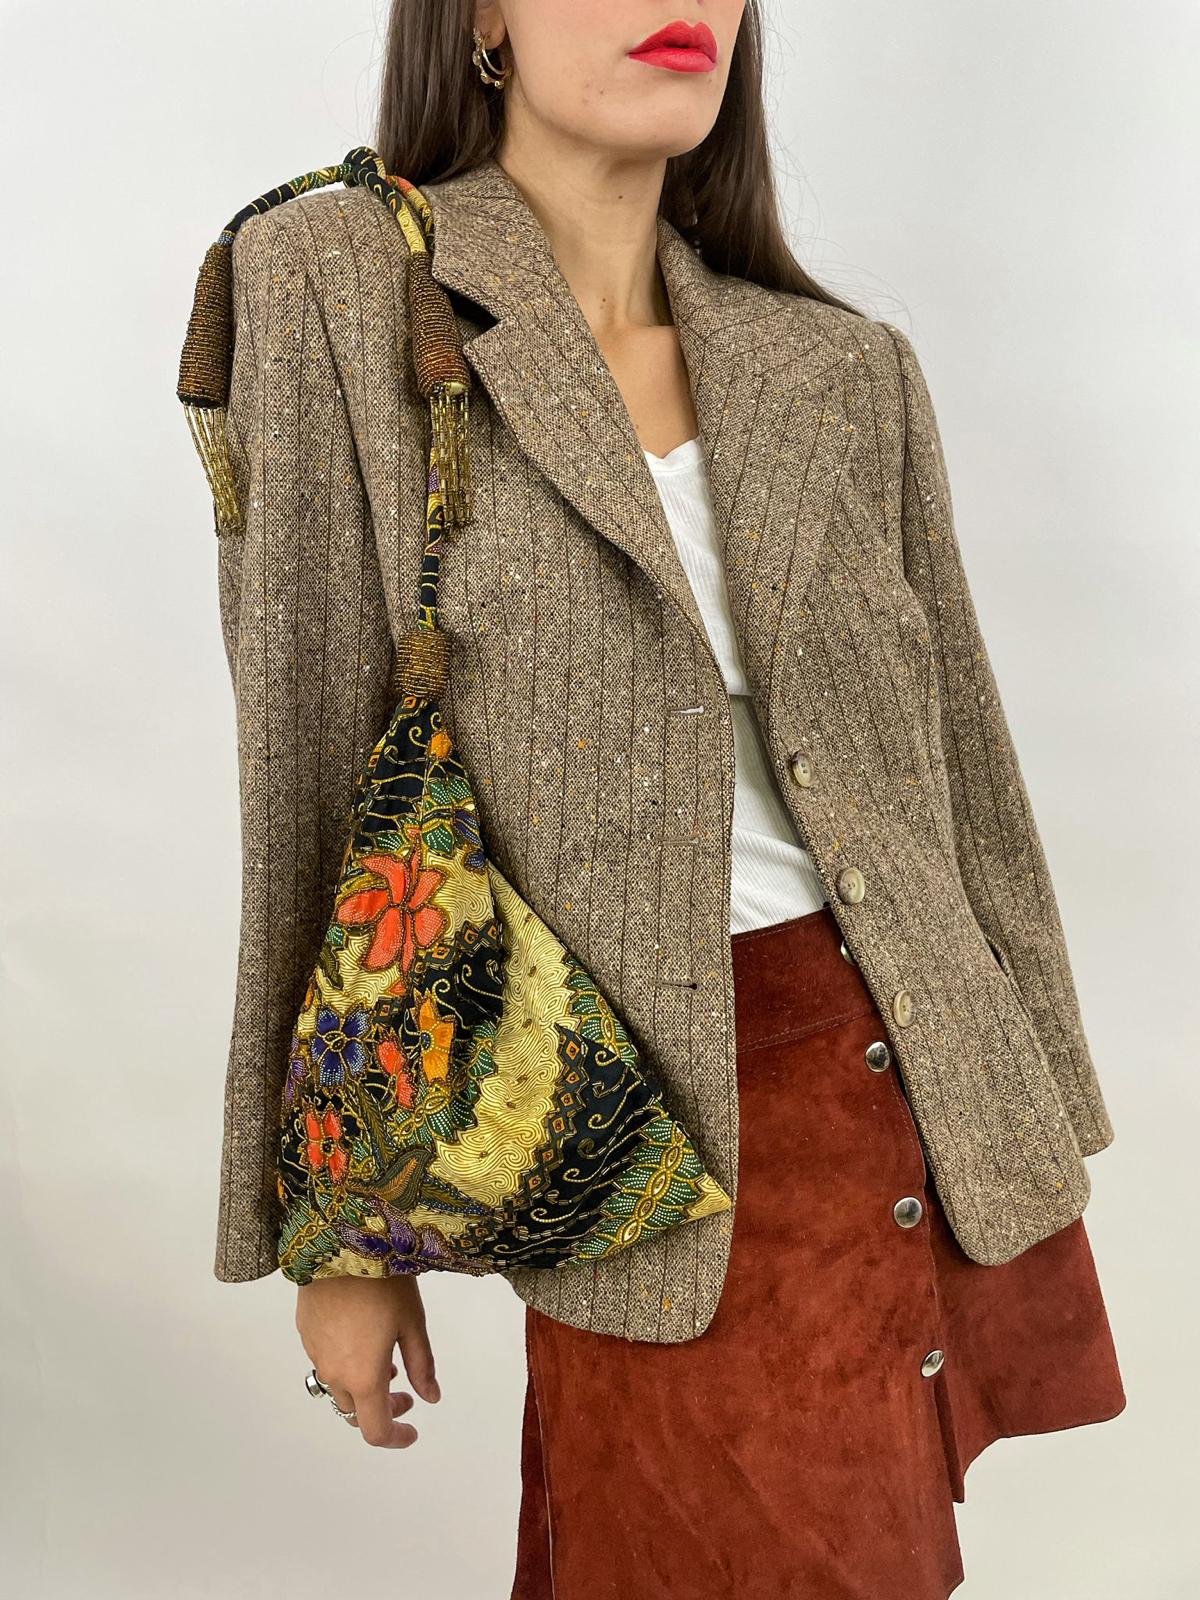 giacca-Nel-donna-vintage-gessata-in-lana-lavorata